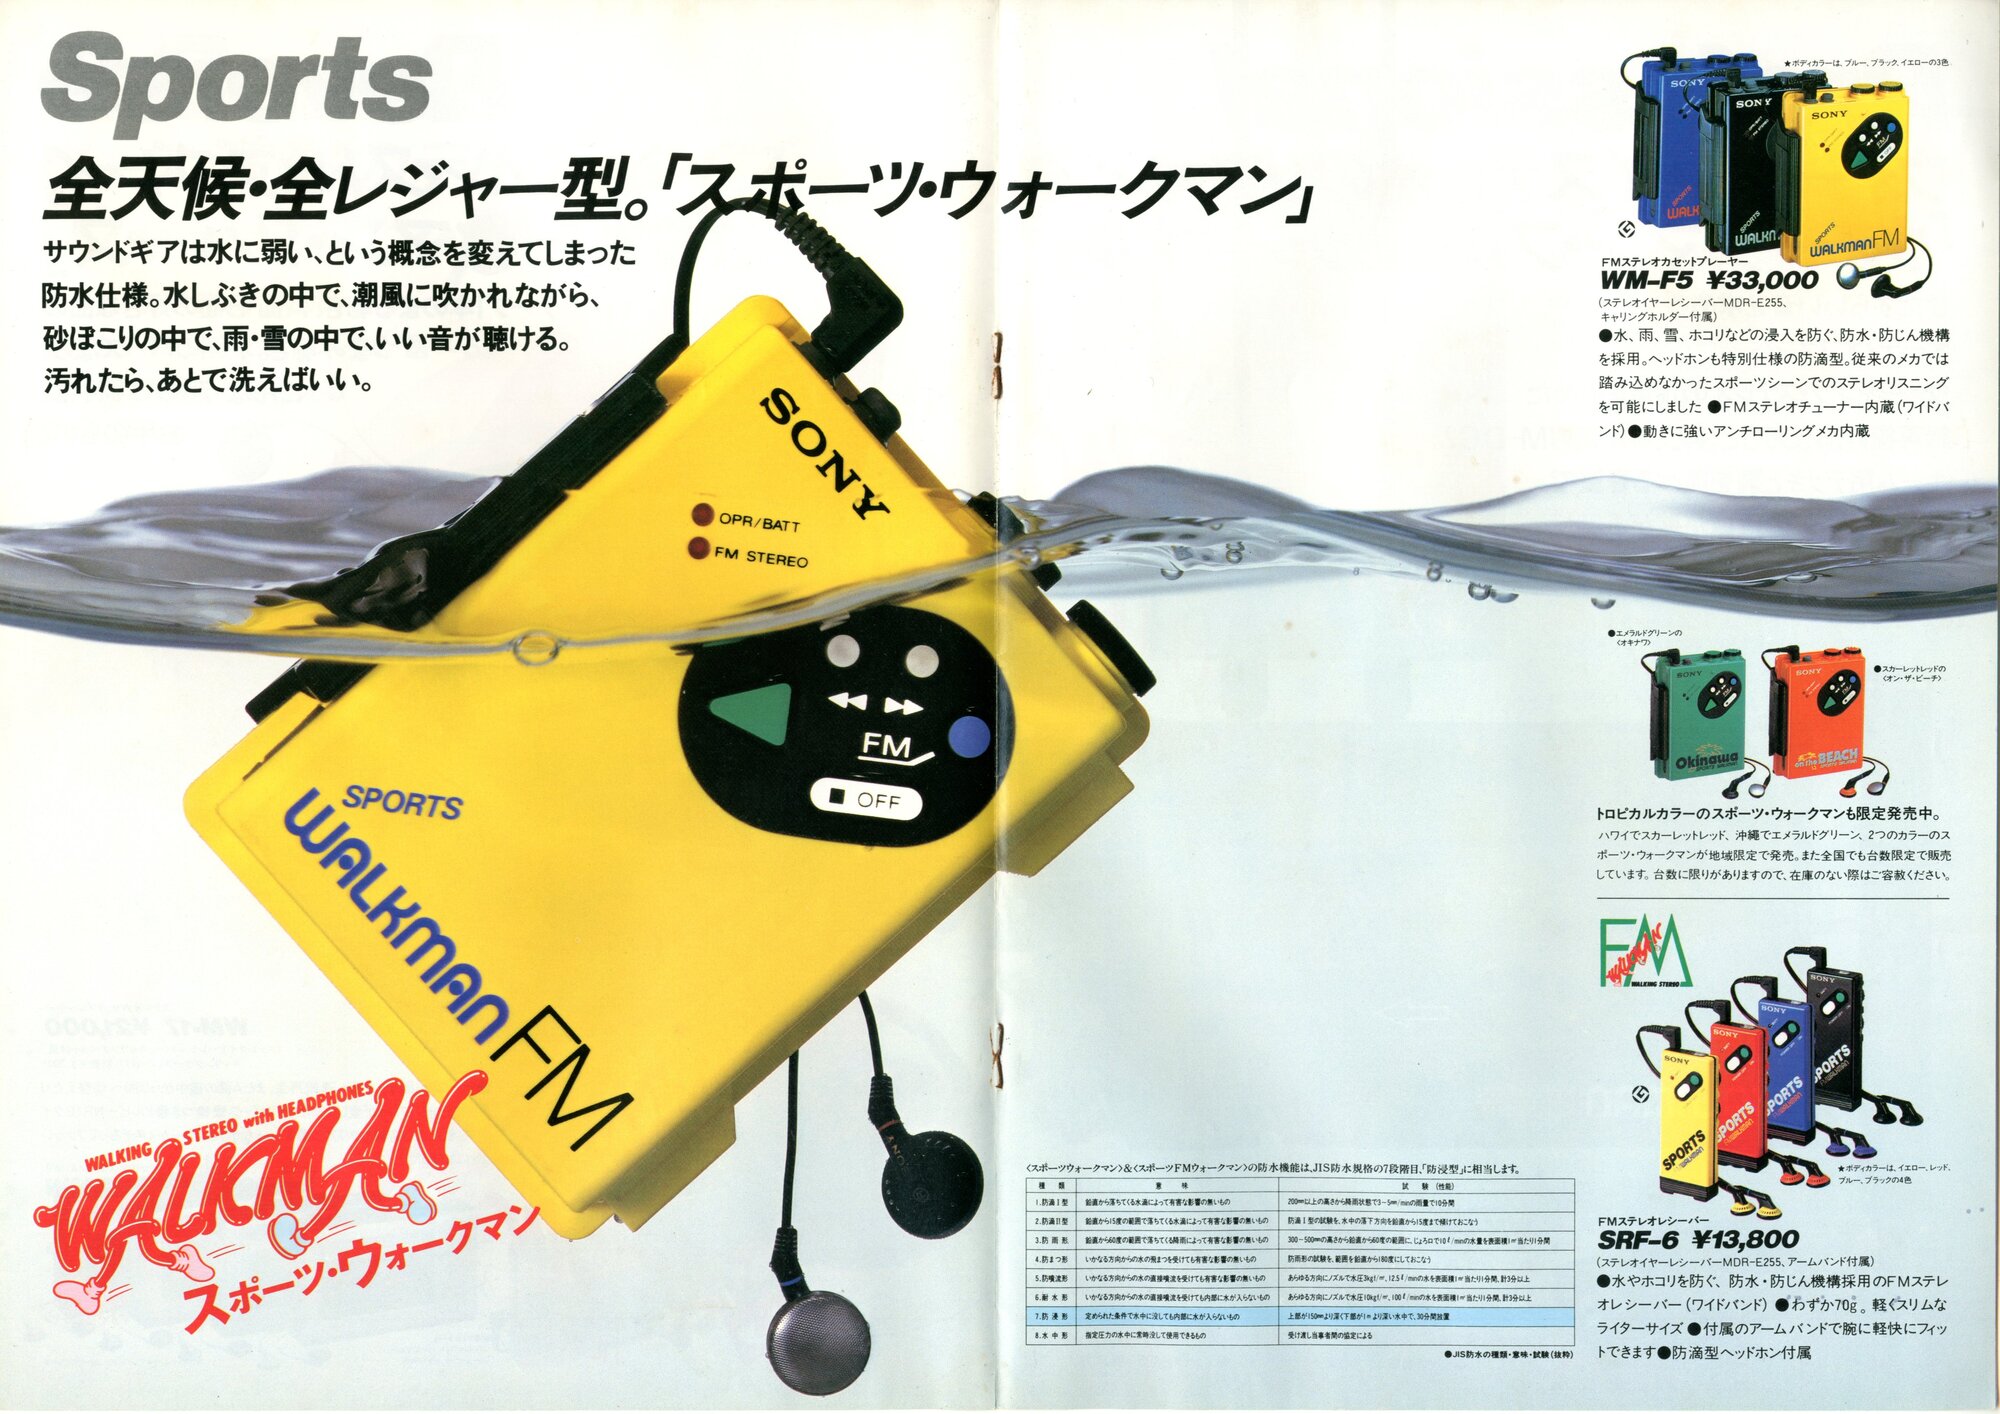 1984-2 Walkman 4.jpg